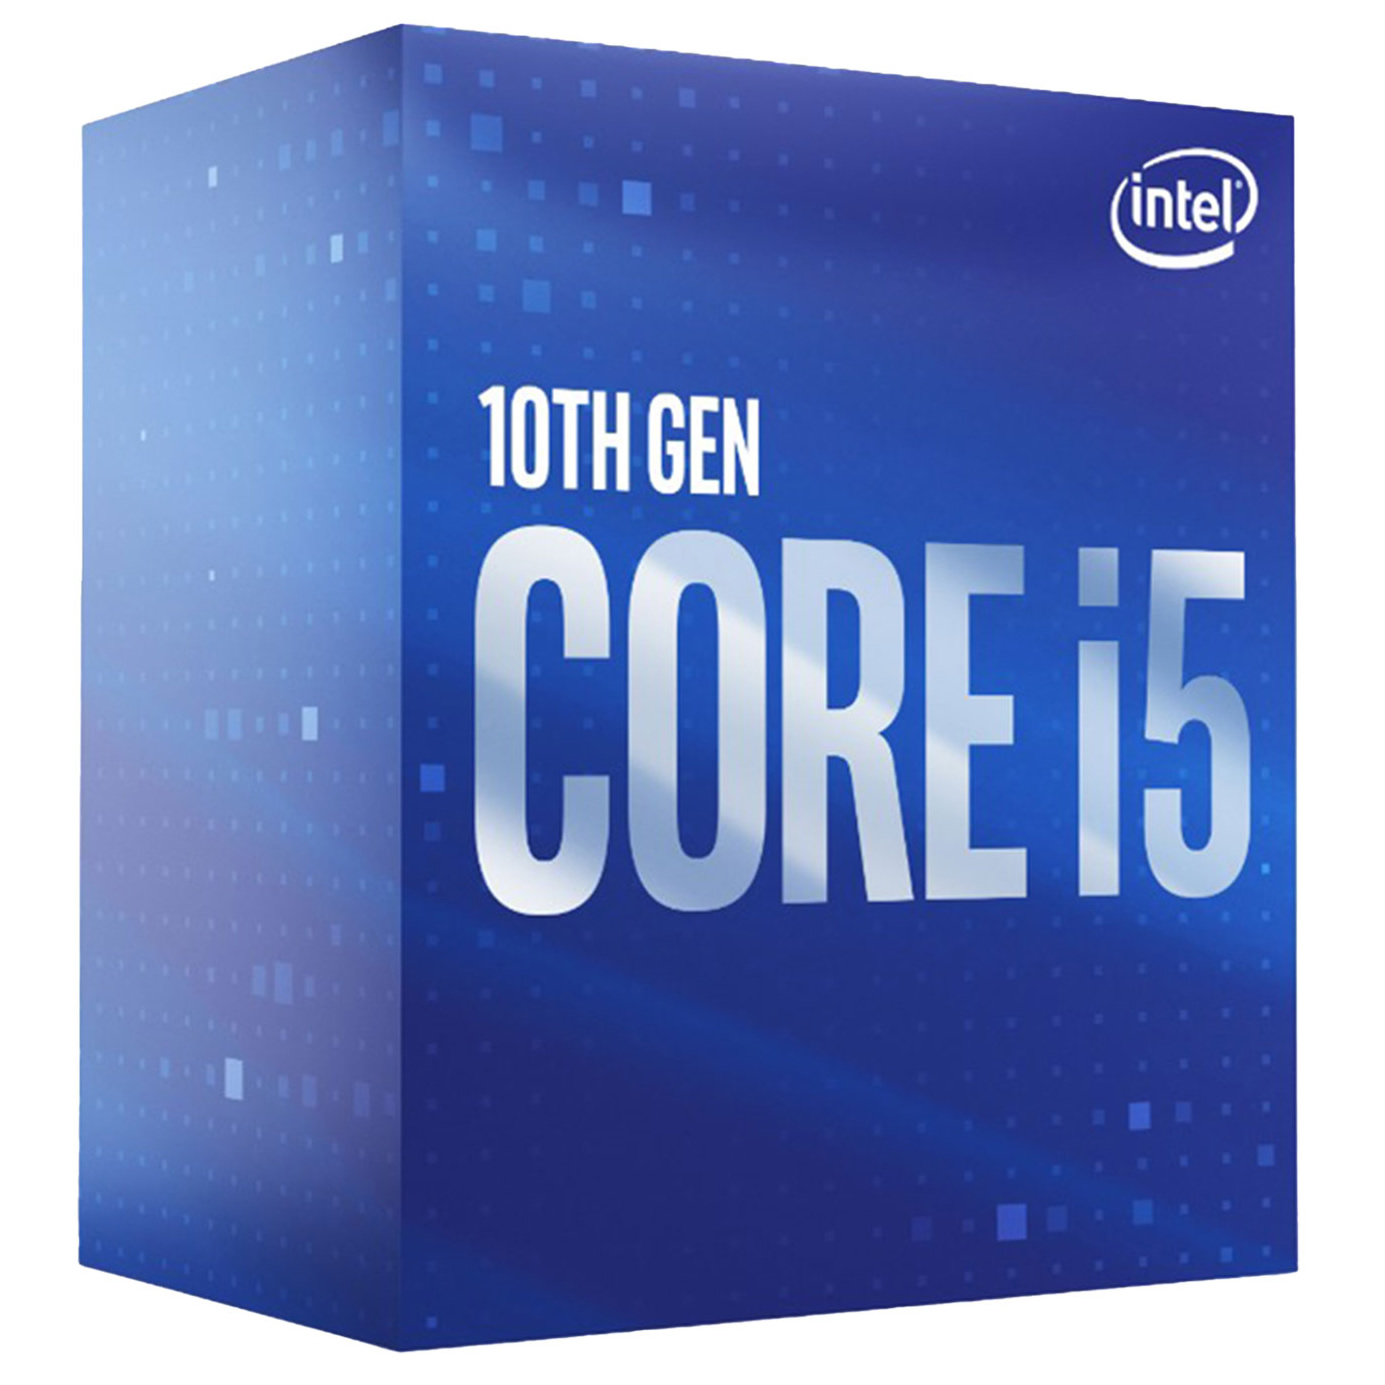 Intel - Intel Core i5-10600 3.30GHz (Comet Lake) Socket LGA1200 Processor - Retail